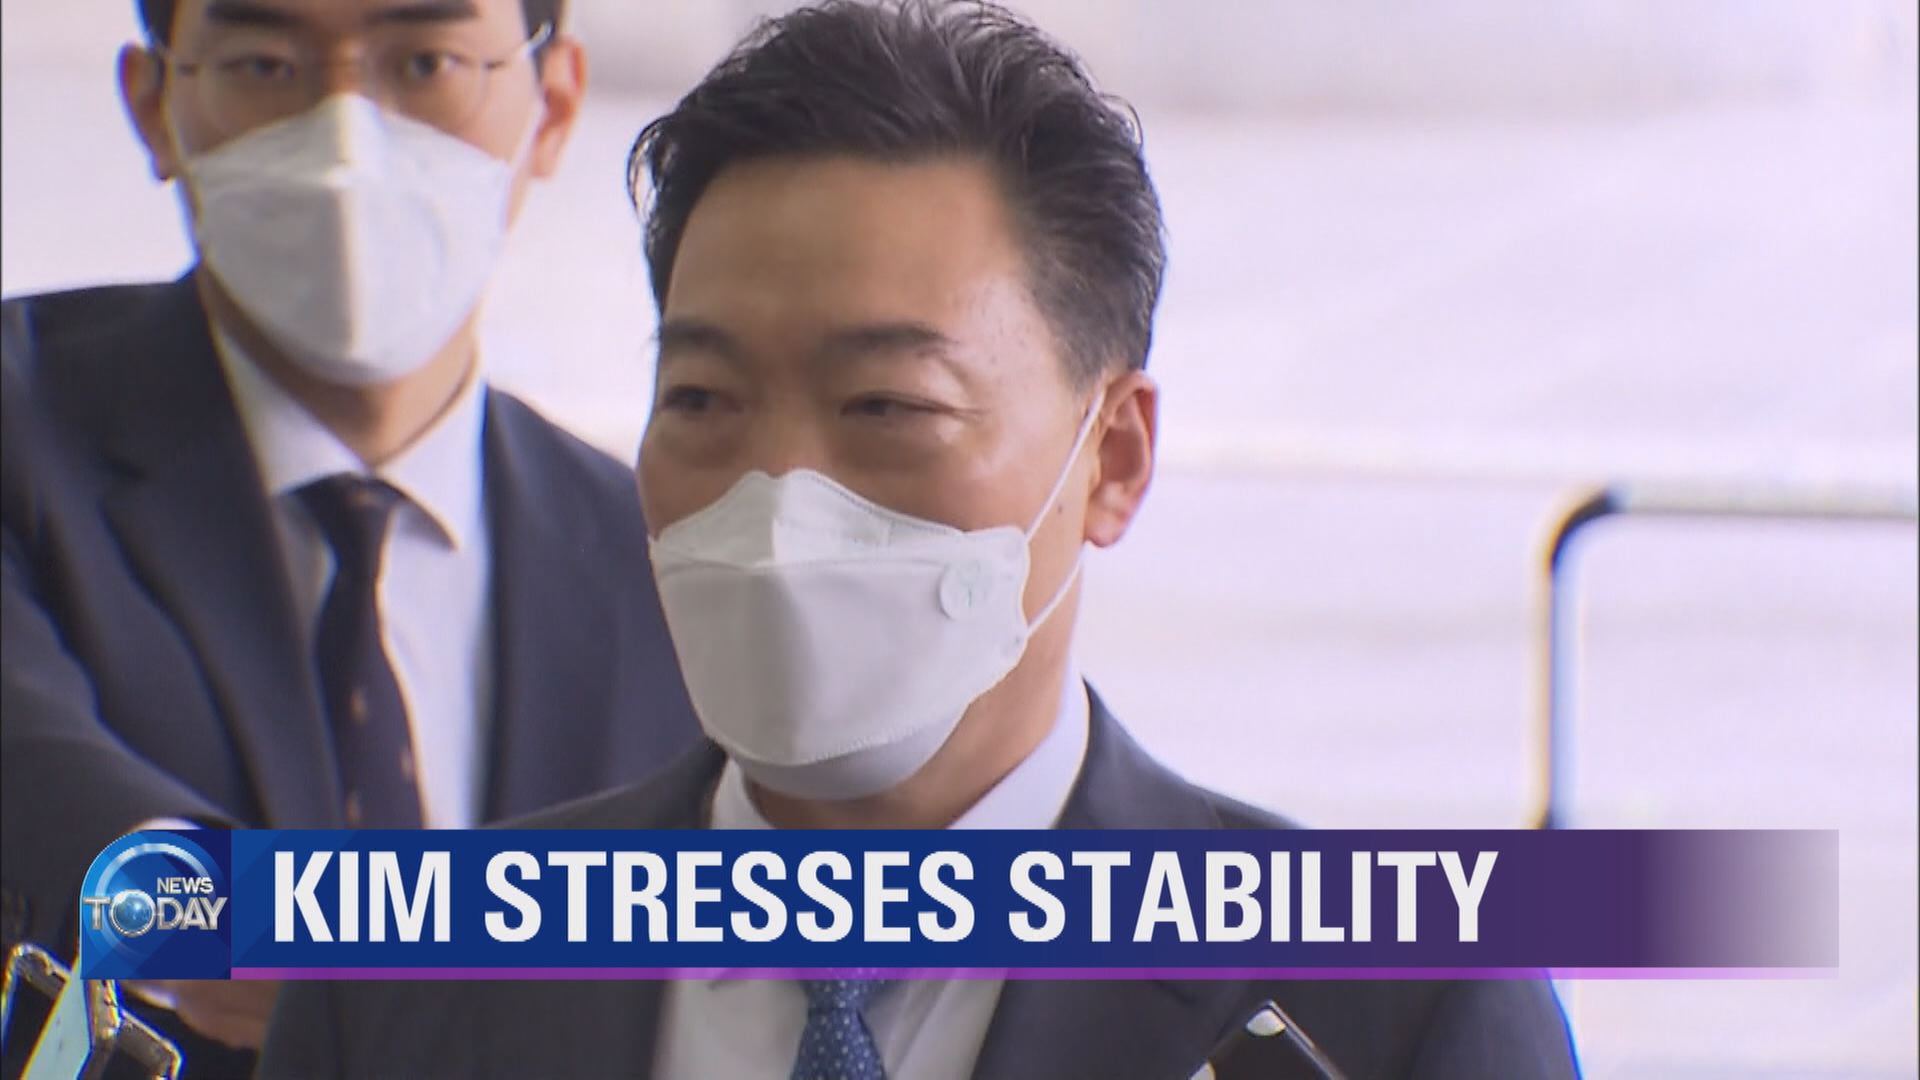 KIM STRESSES STABILITY